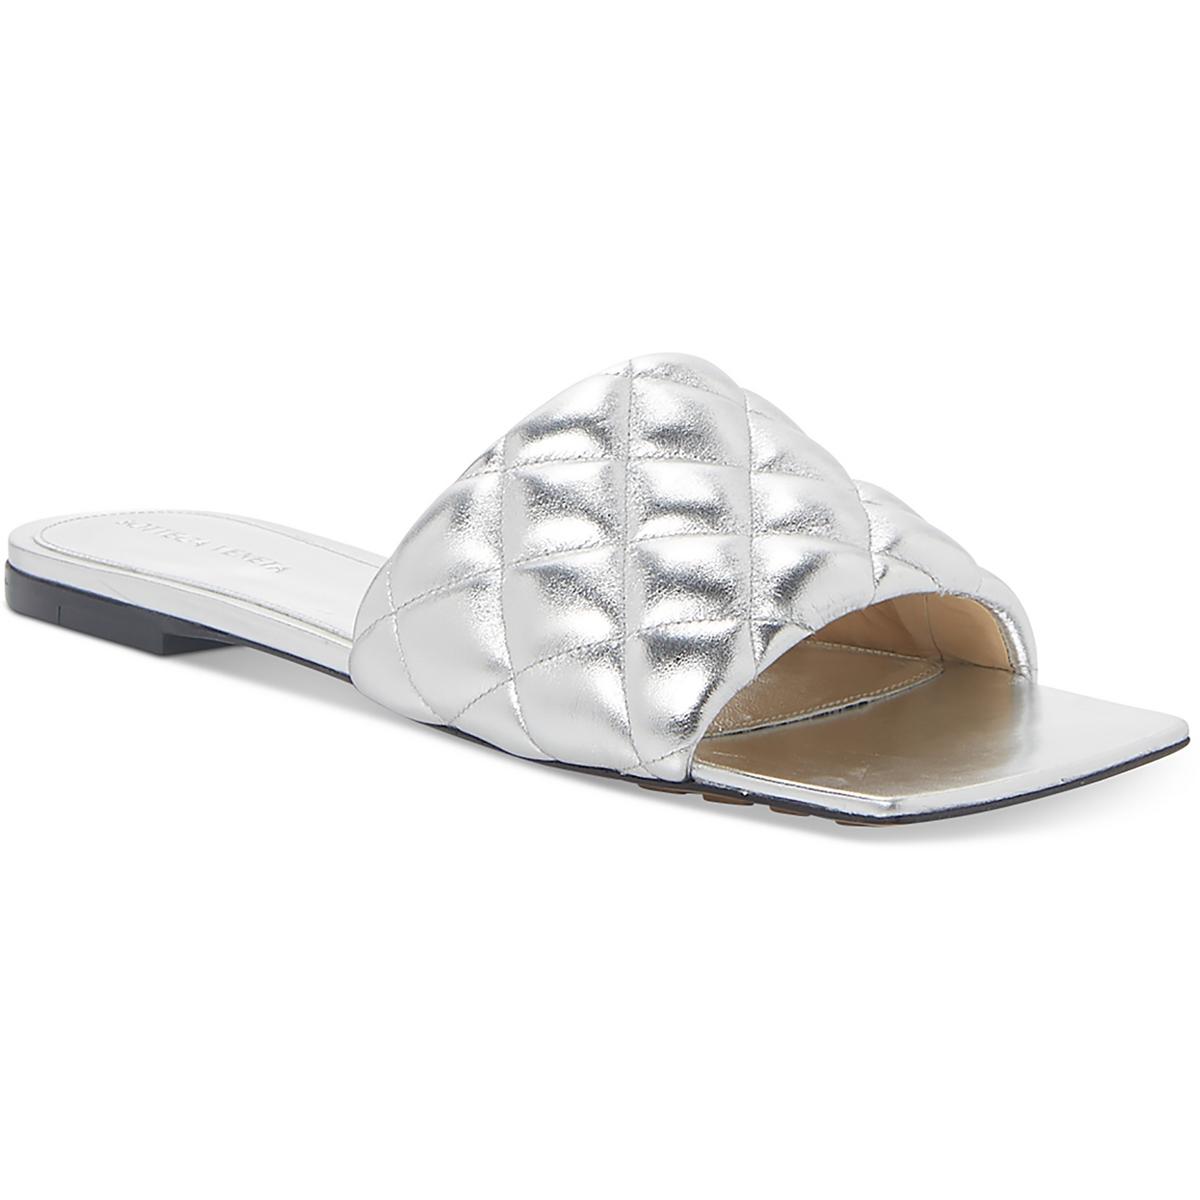 Bottega Veneta Reflection Matelasse Womens Leather Quilted Slide Sandals